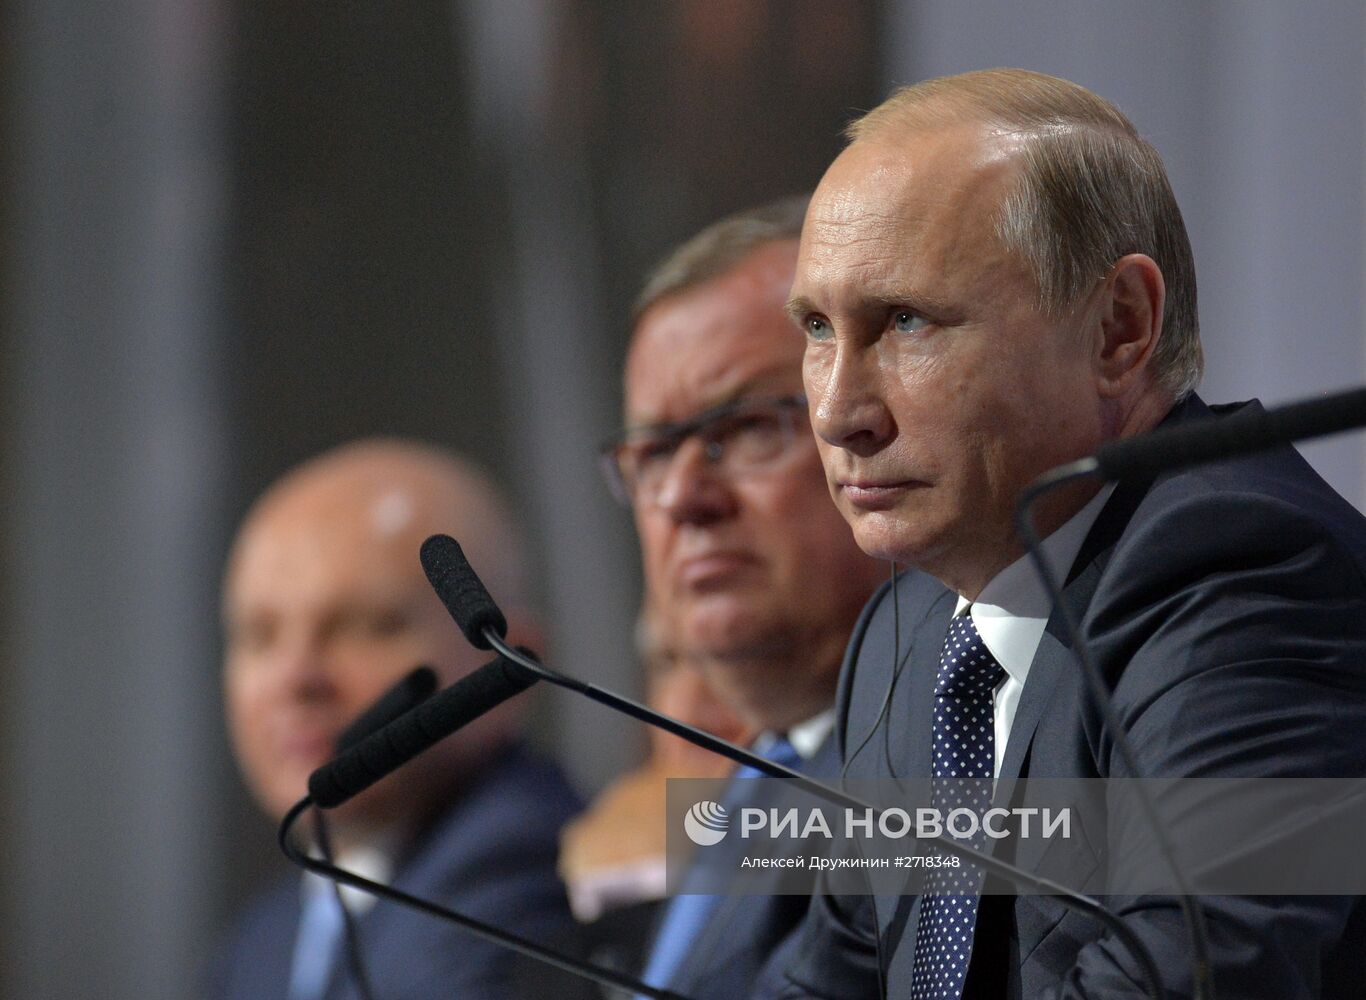 Президент РФ В.Путин посетил форум ВТБ Капитал "Россия зовет!"